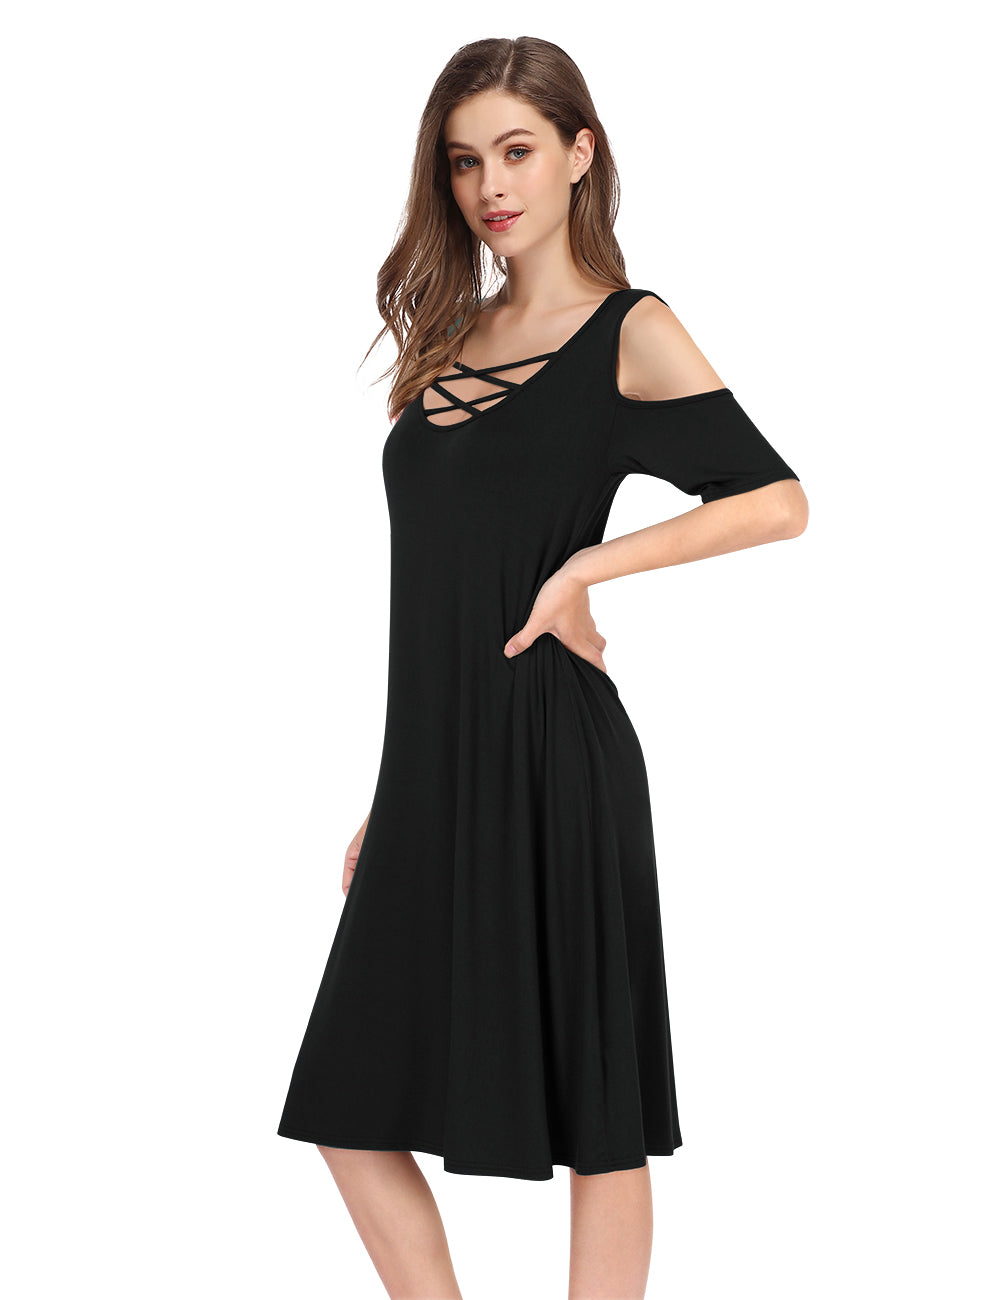 Women's Cold Shoulder Short Sleeve Solid Color Loose Casual Dress